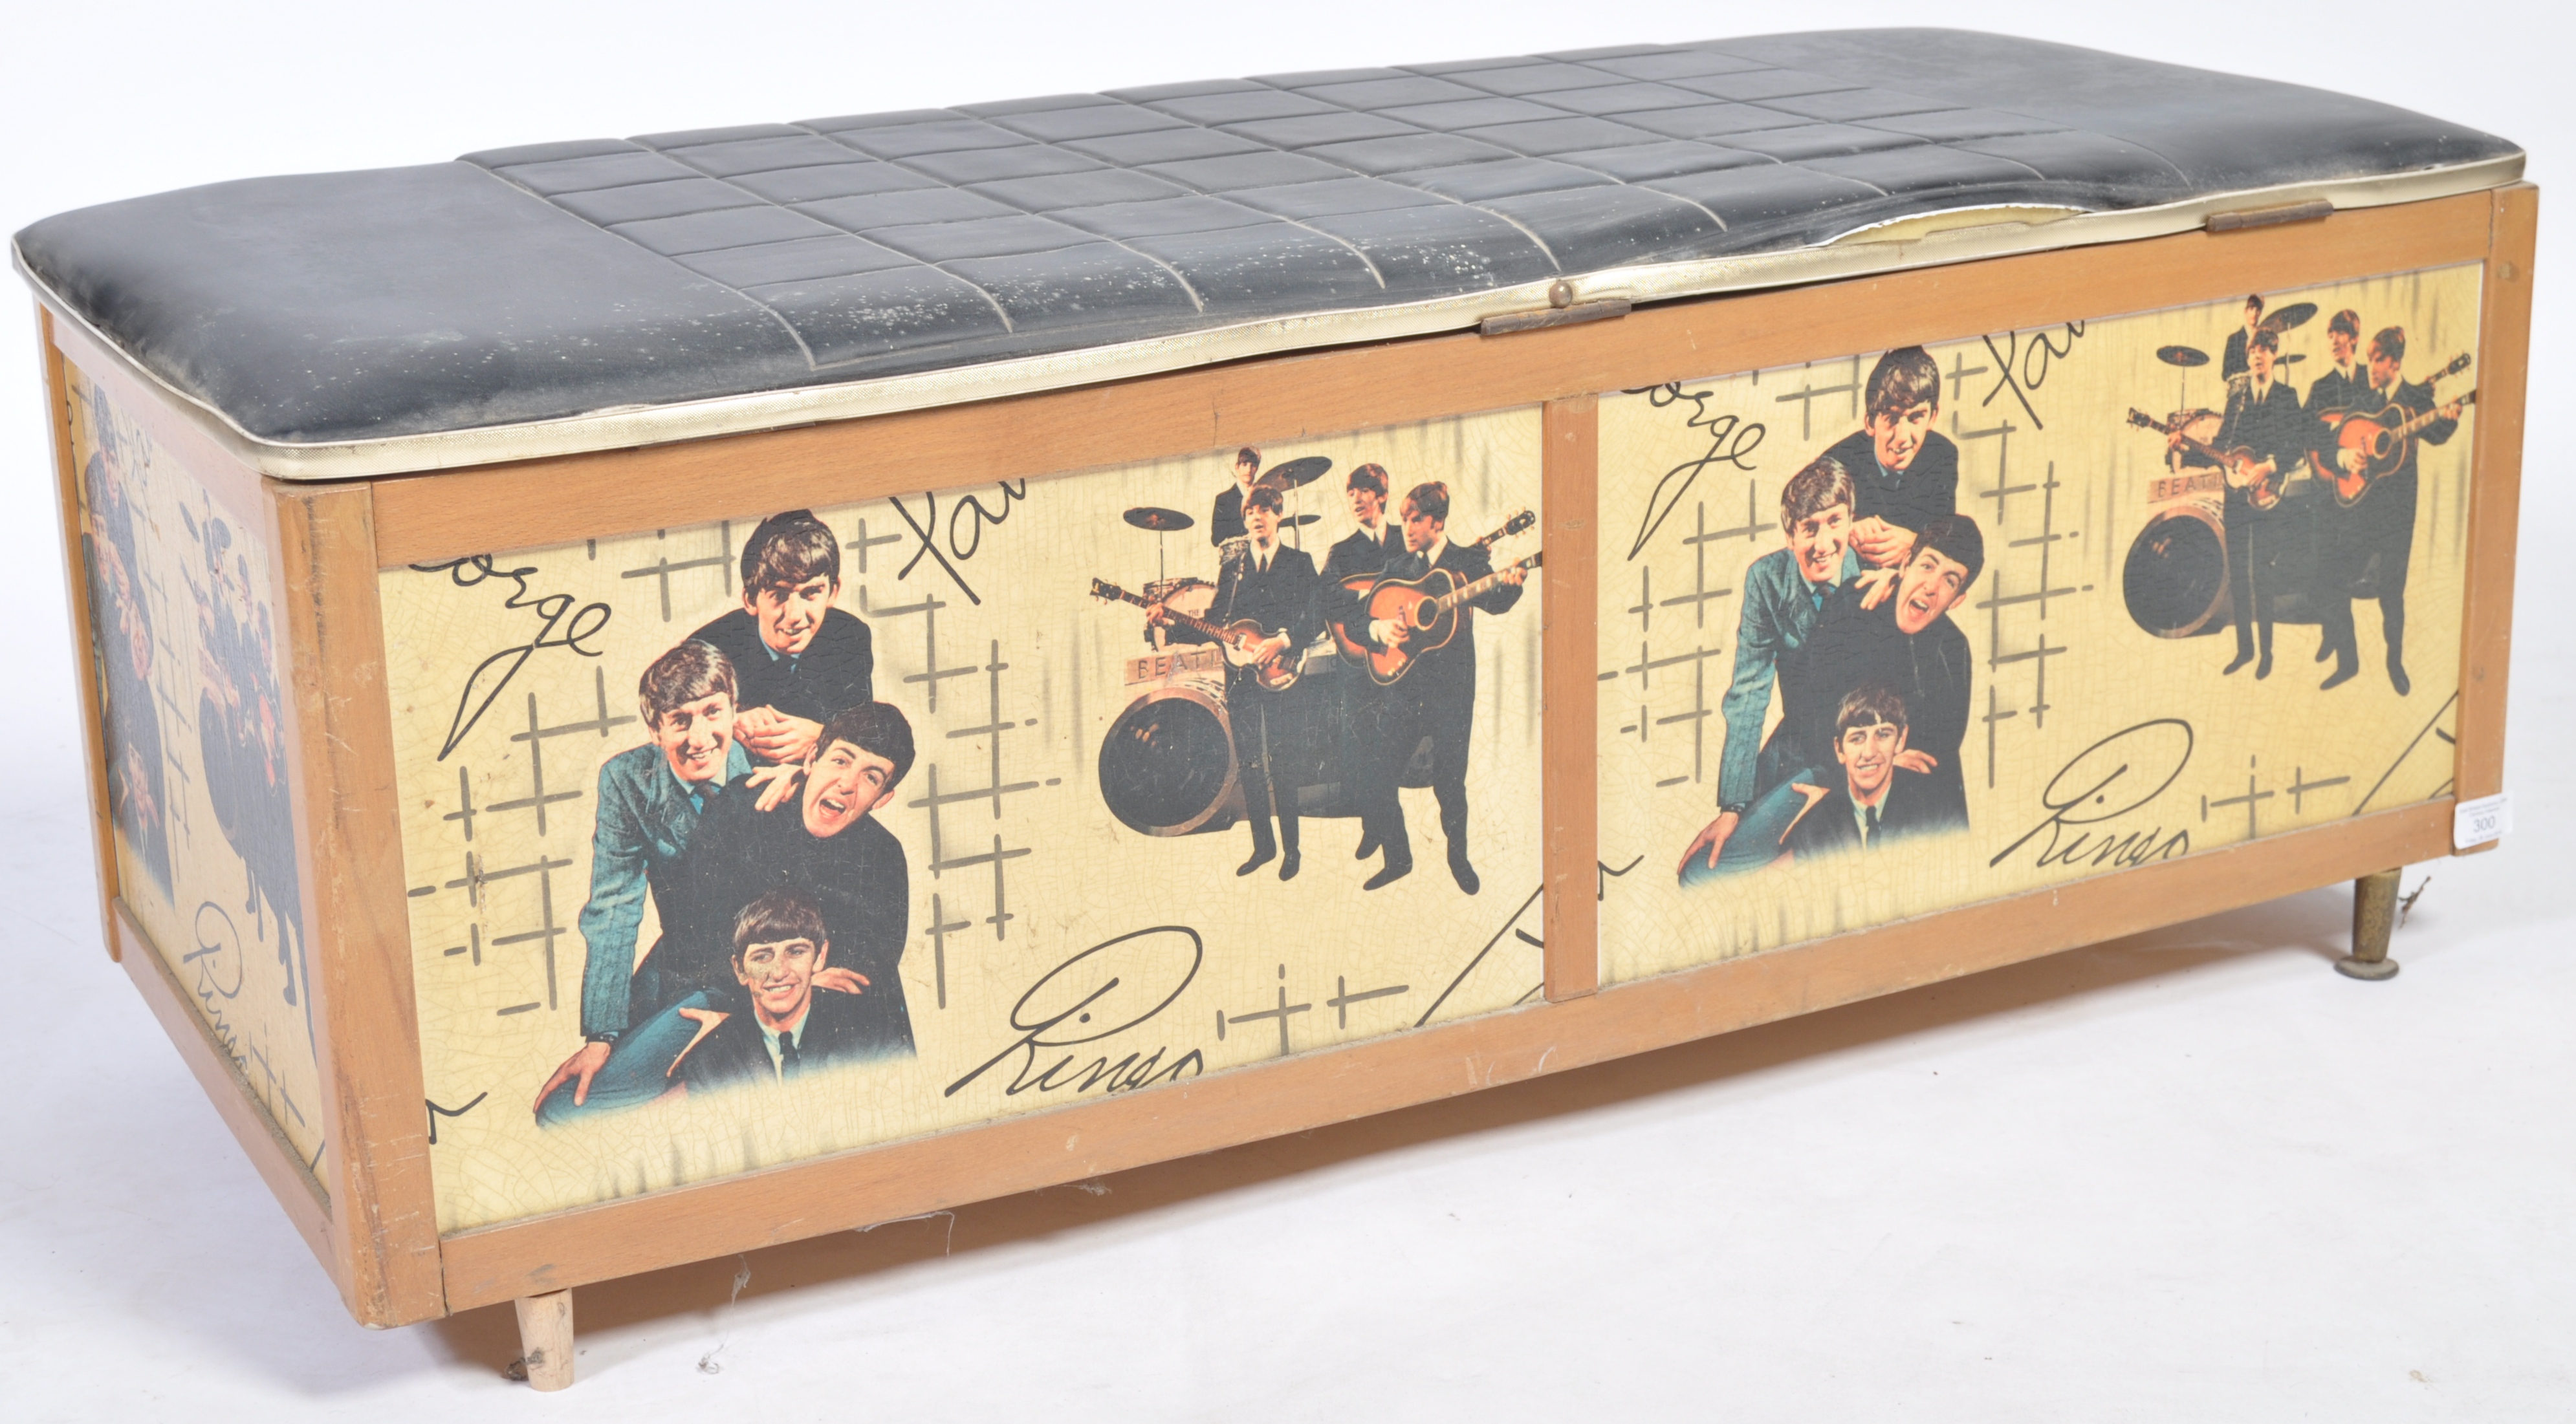 RARE 1960'S BEATLES OTTOMAN / BLANKET BOX BY AVALO